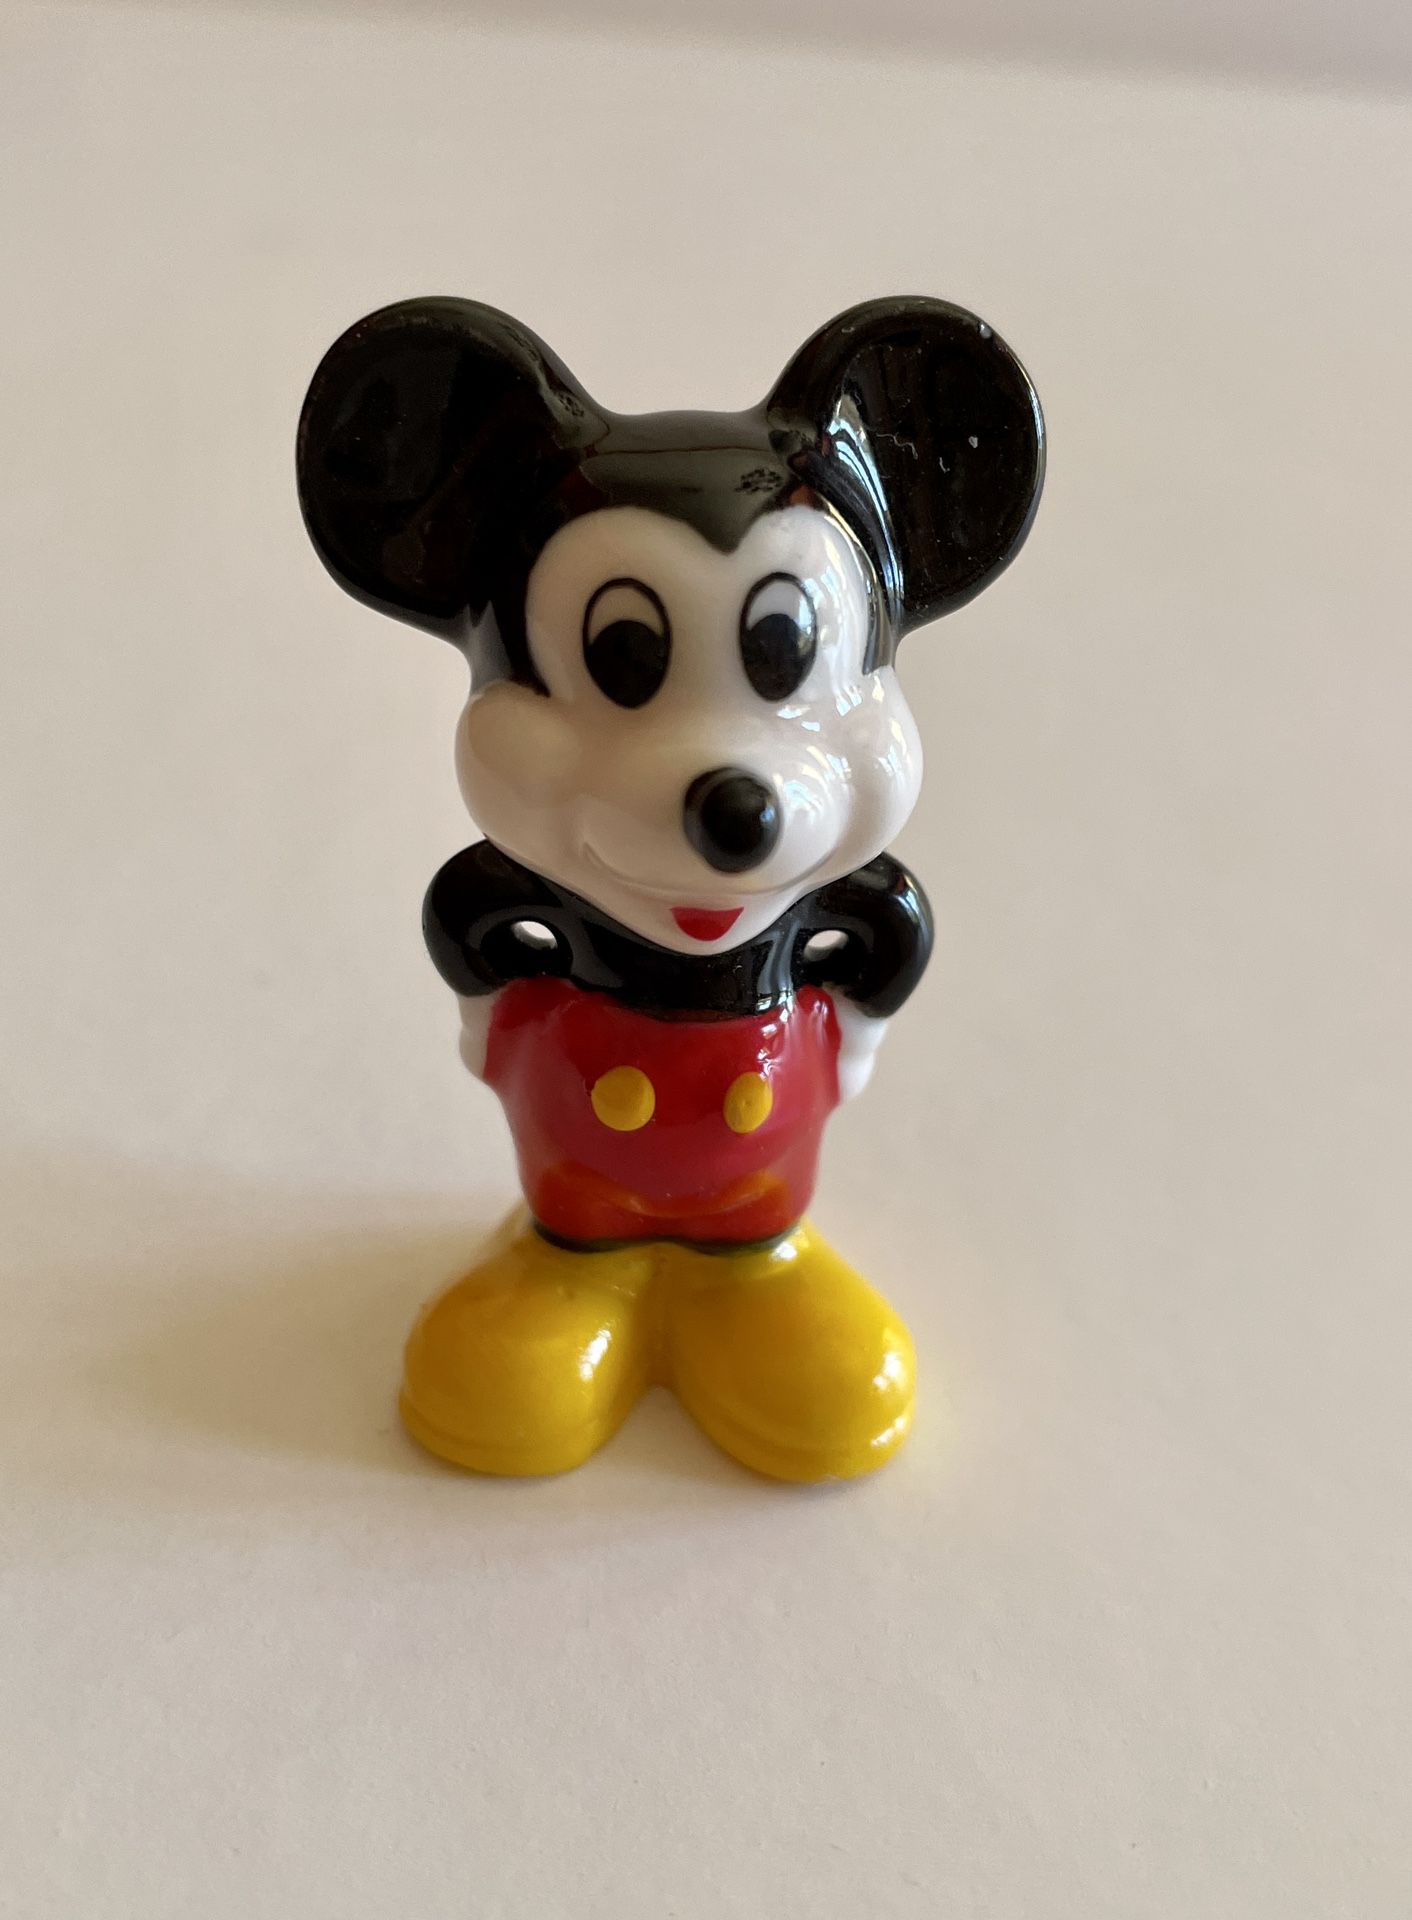 Ceramic Mickey Mouse Figurine